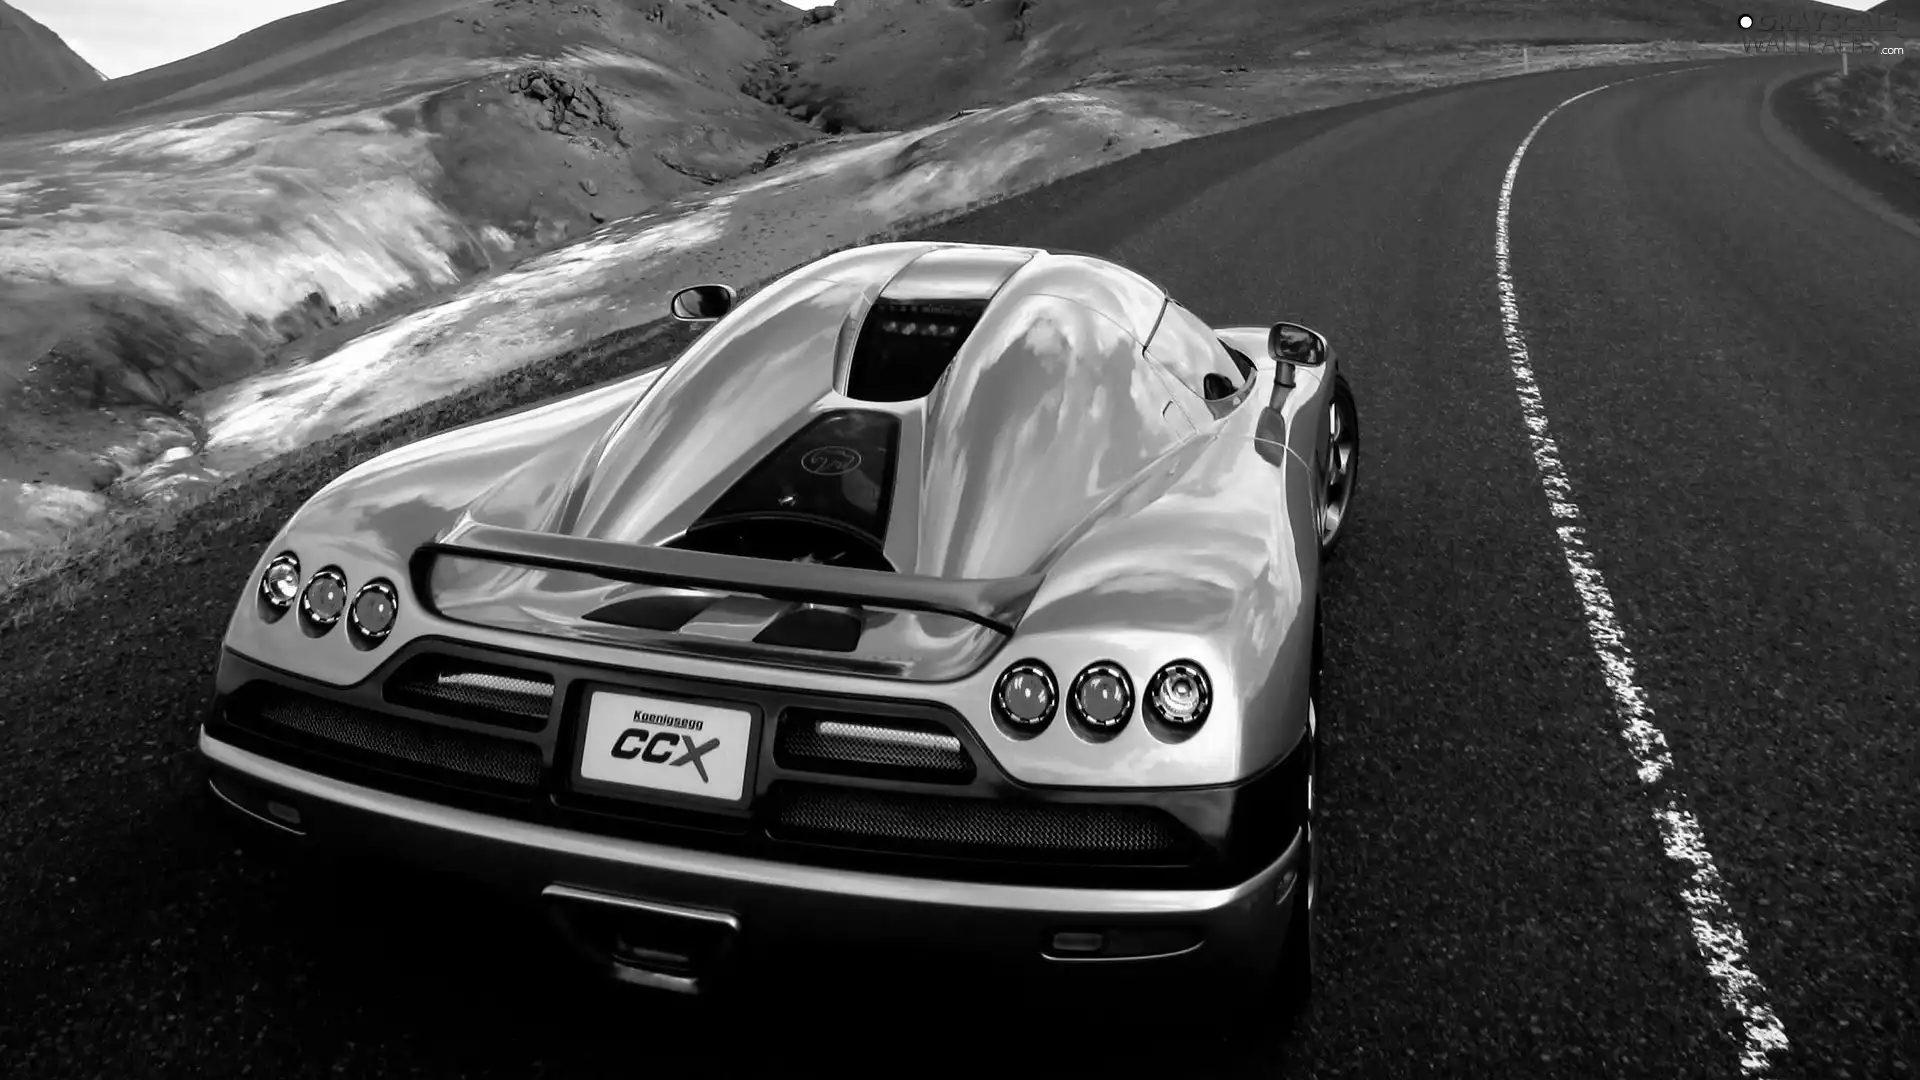 The Hills, Koenigsegg CCX, Way